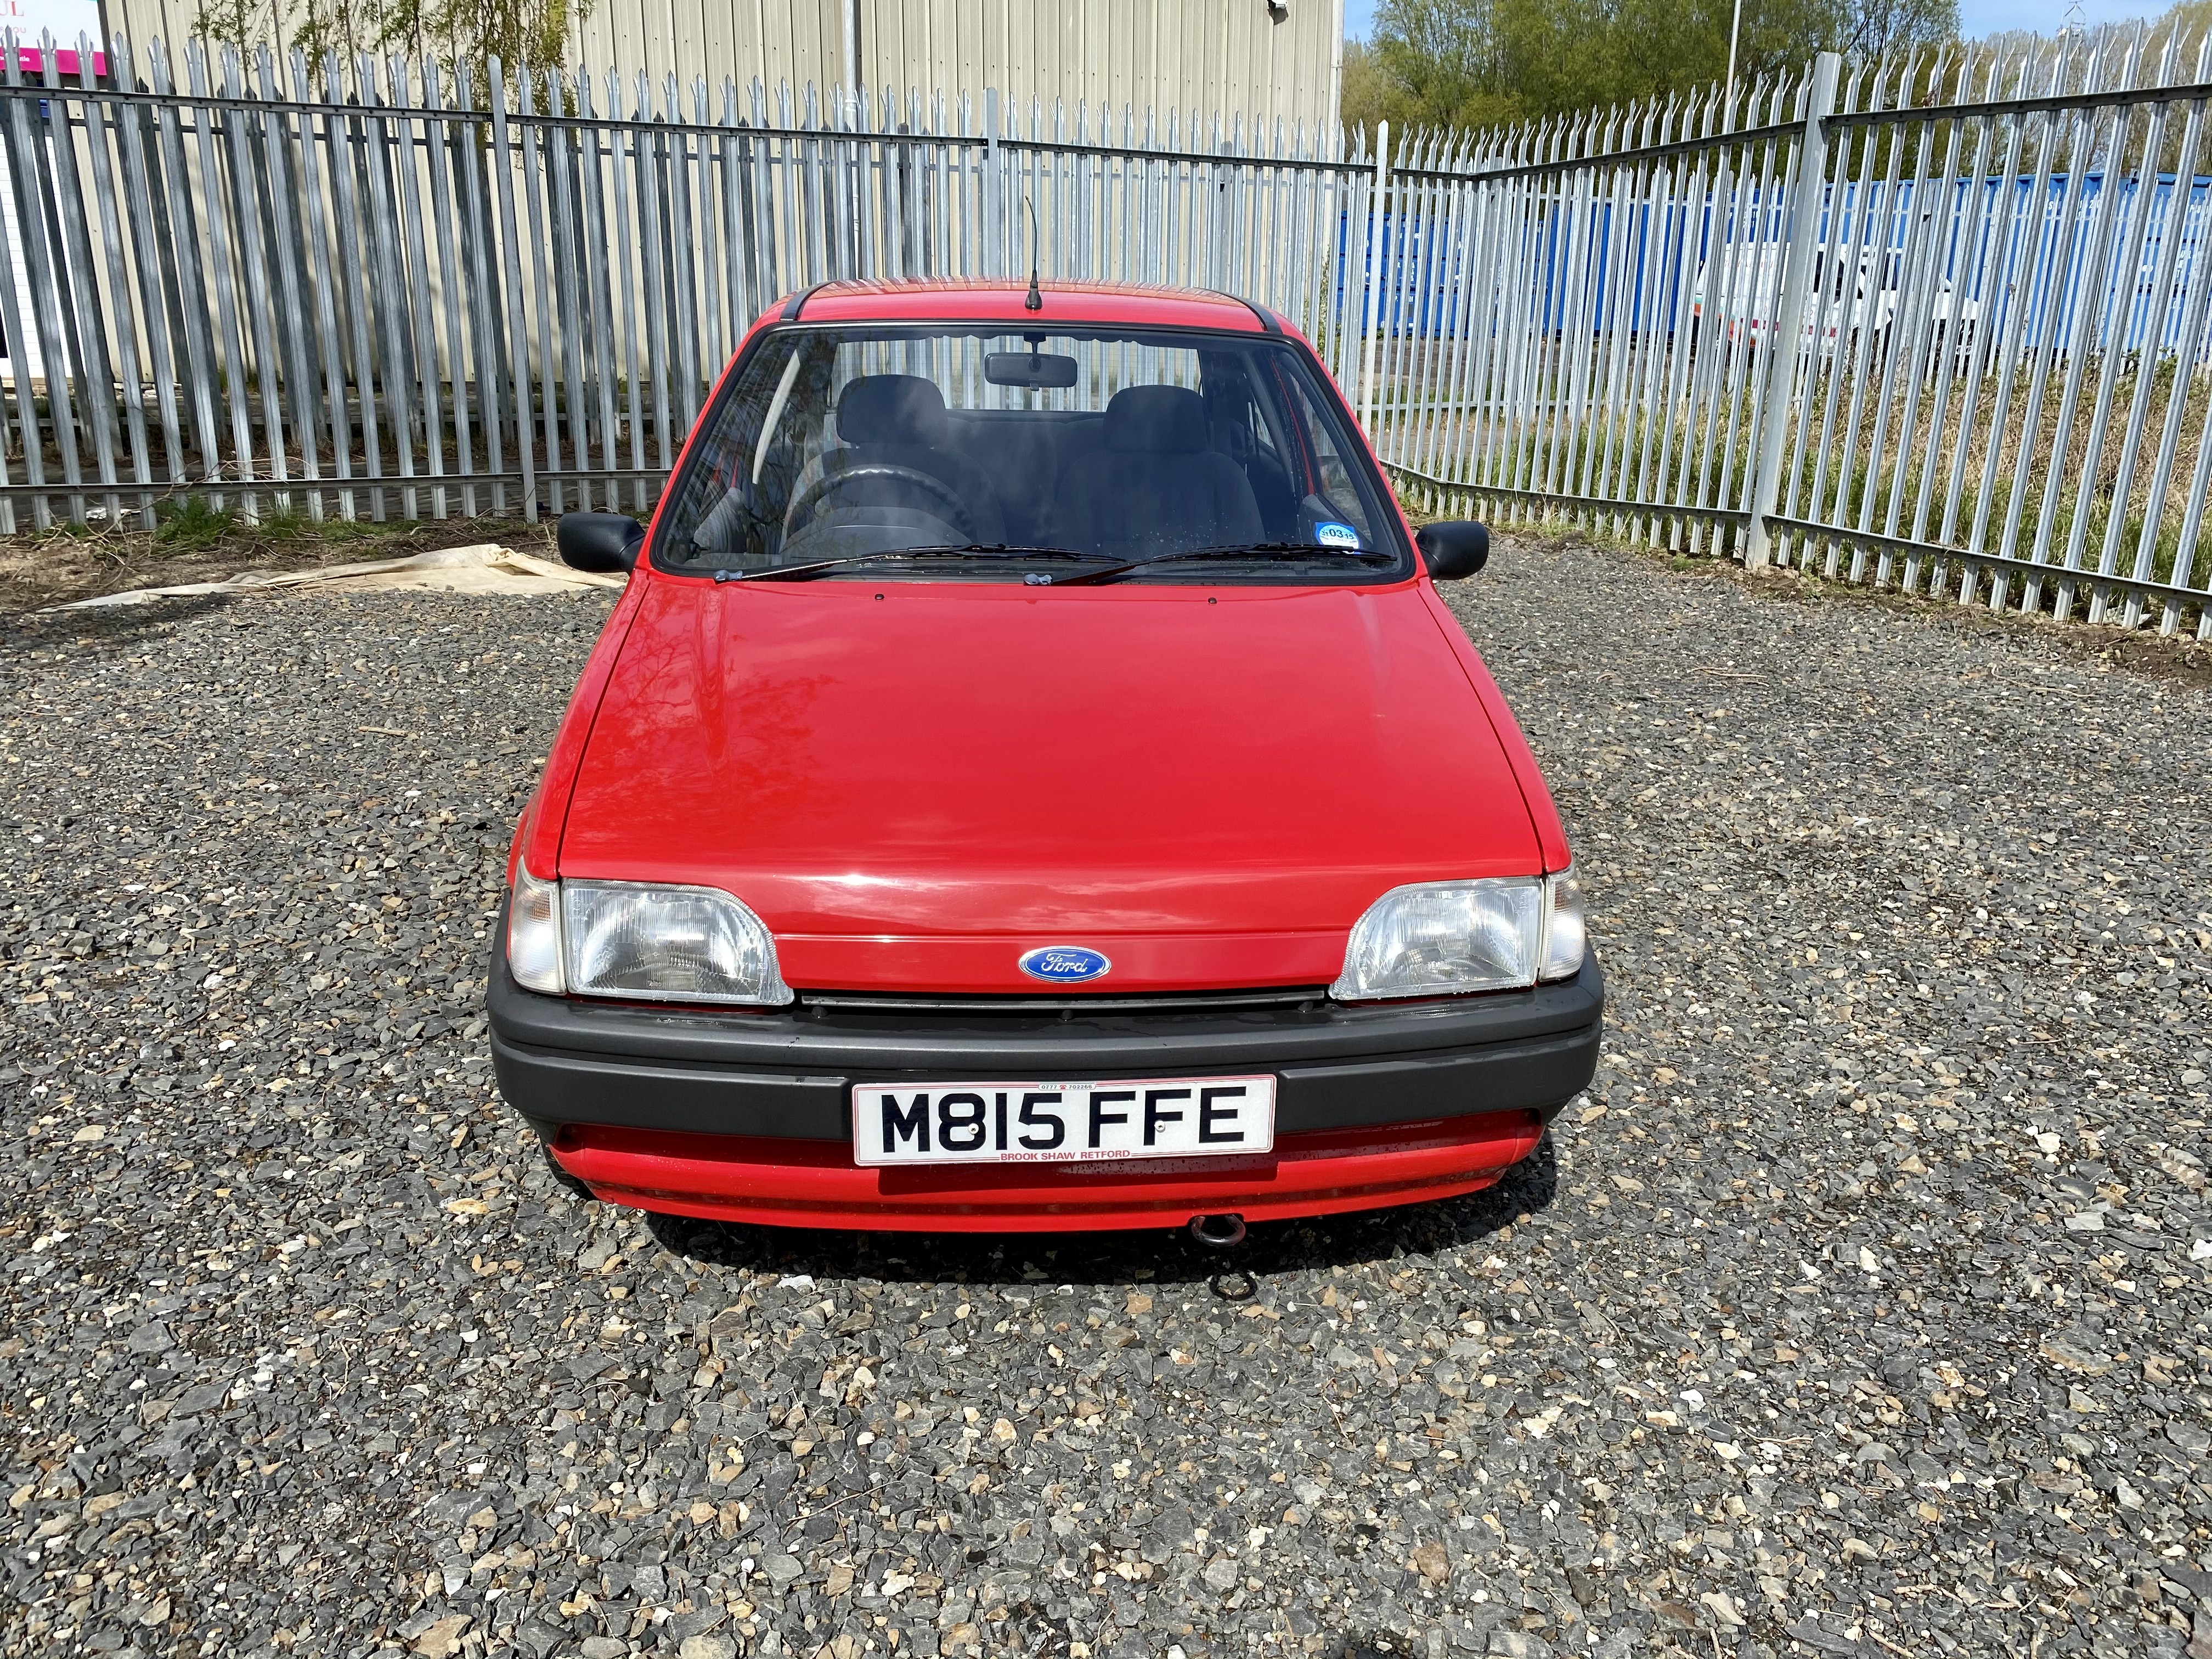 Ford Fiesta MK3 - Image 19 of 44